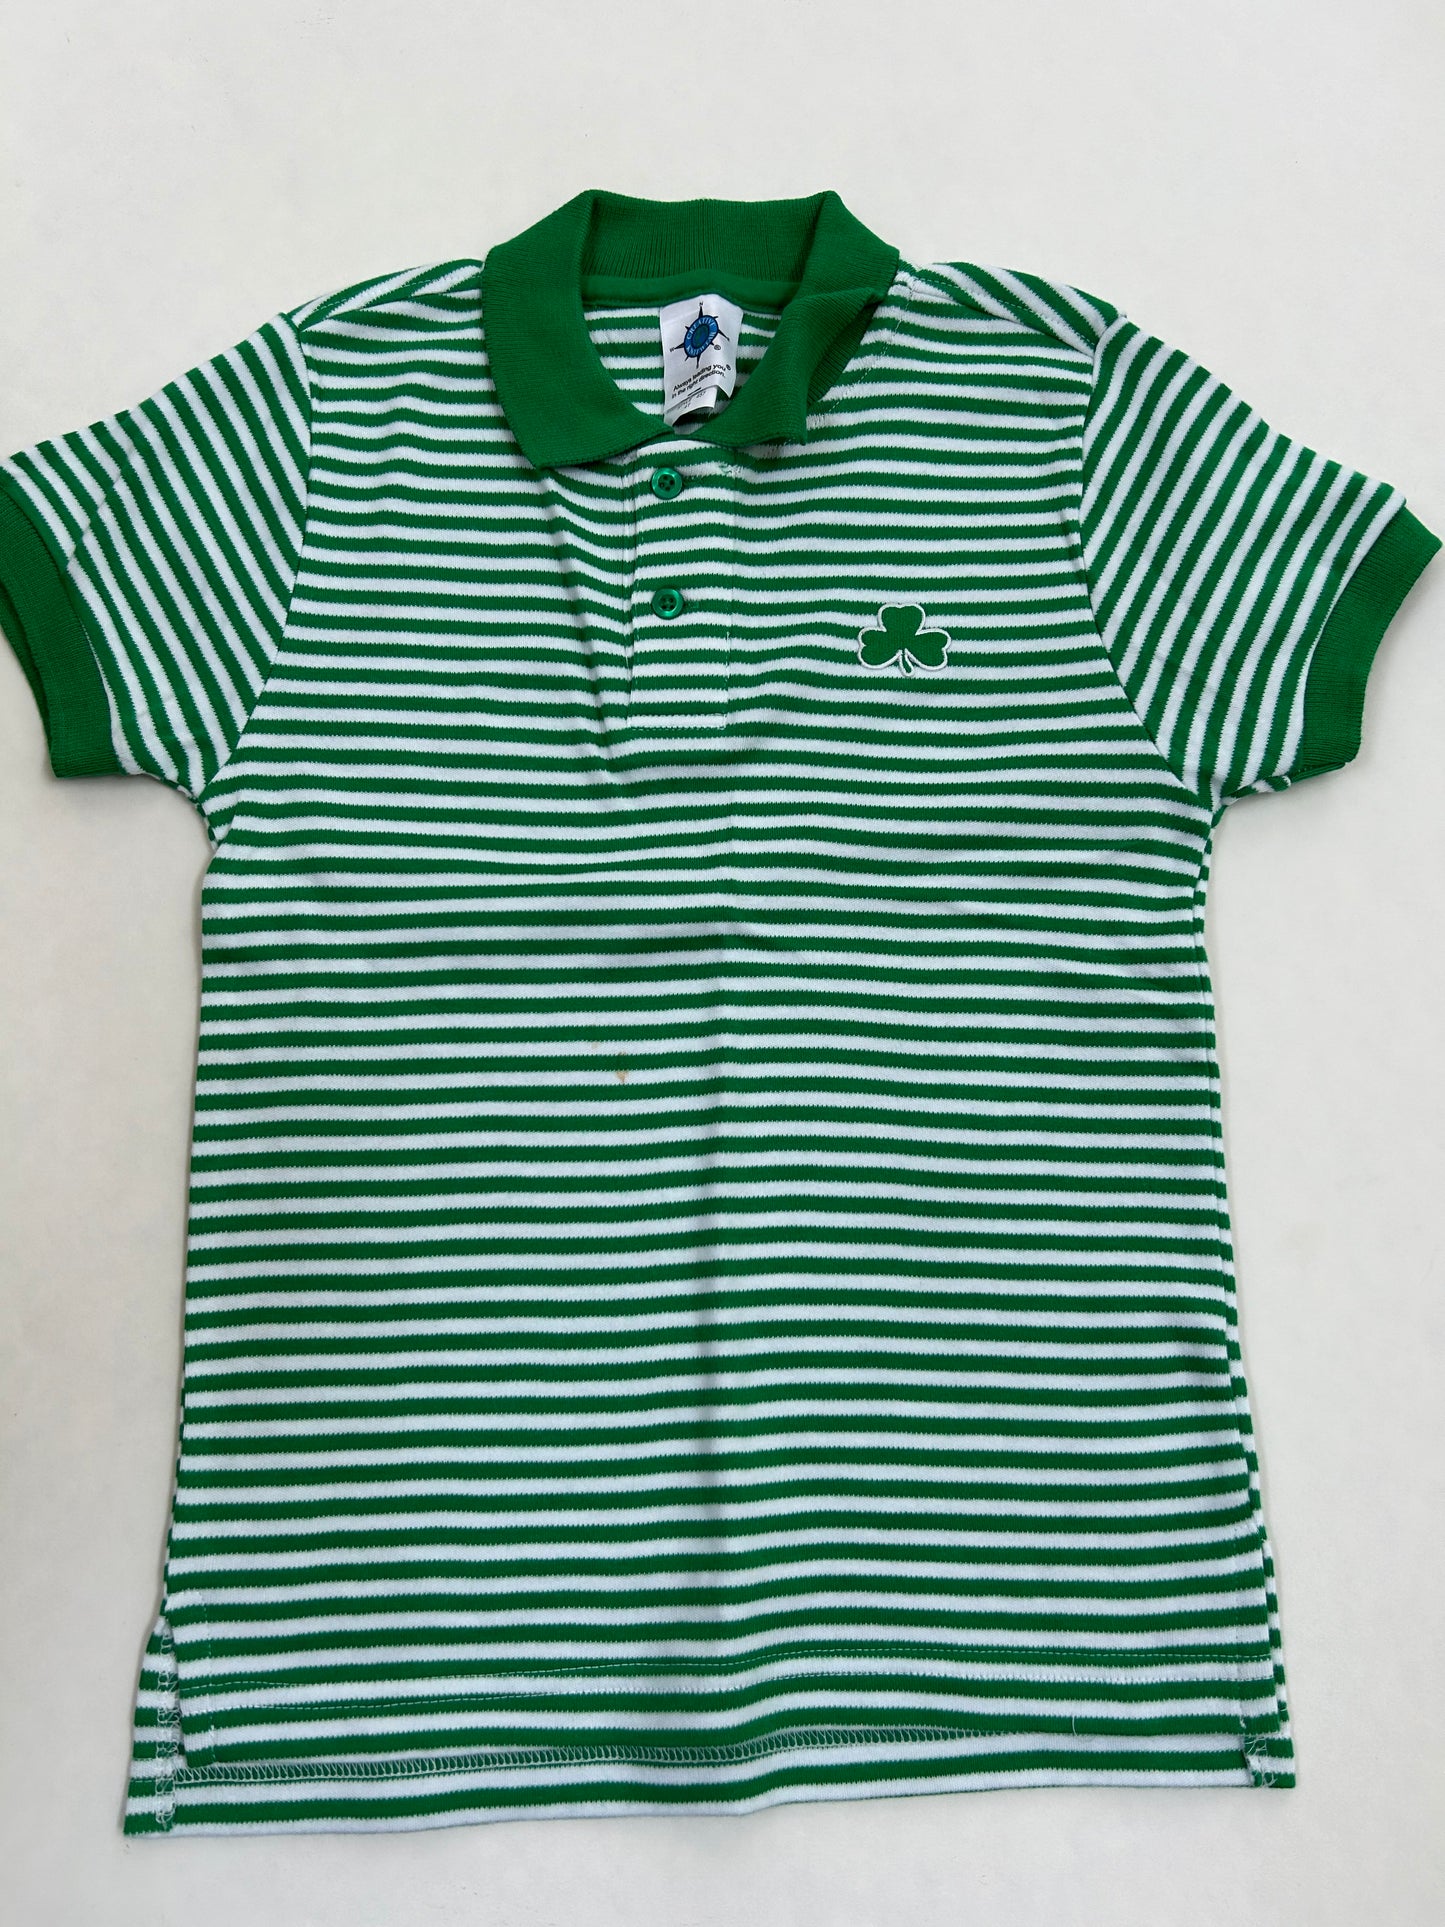 Boys 4T St Patrick's Day shirt